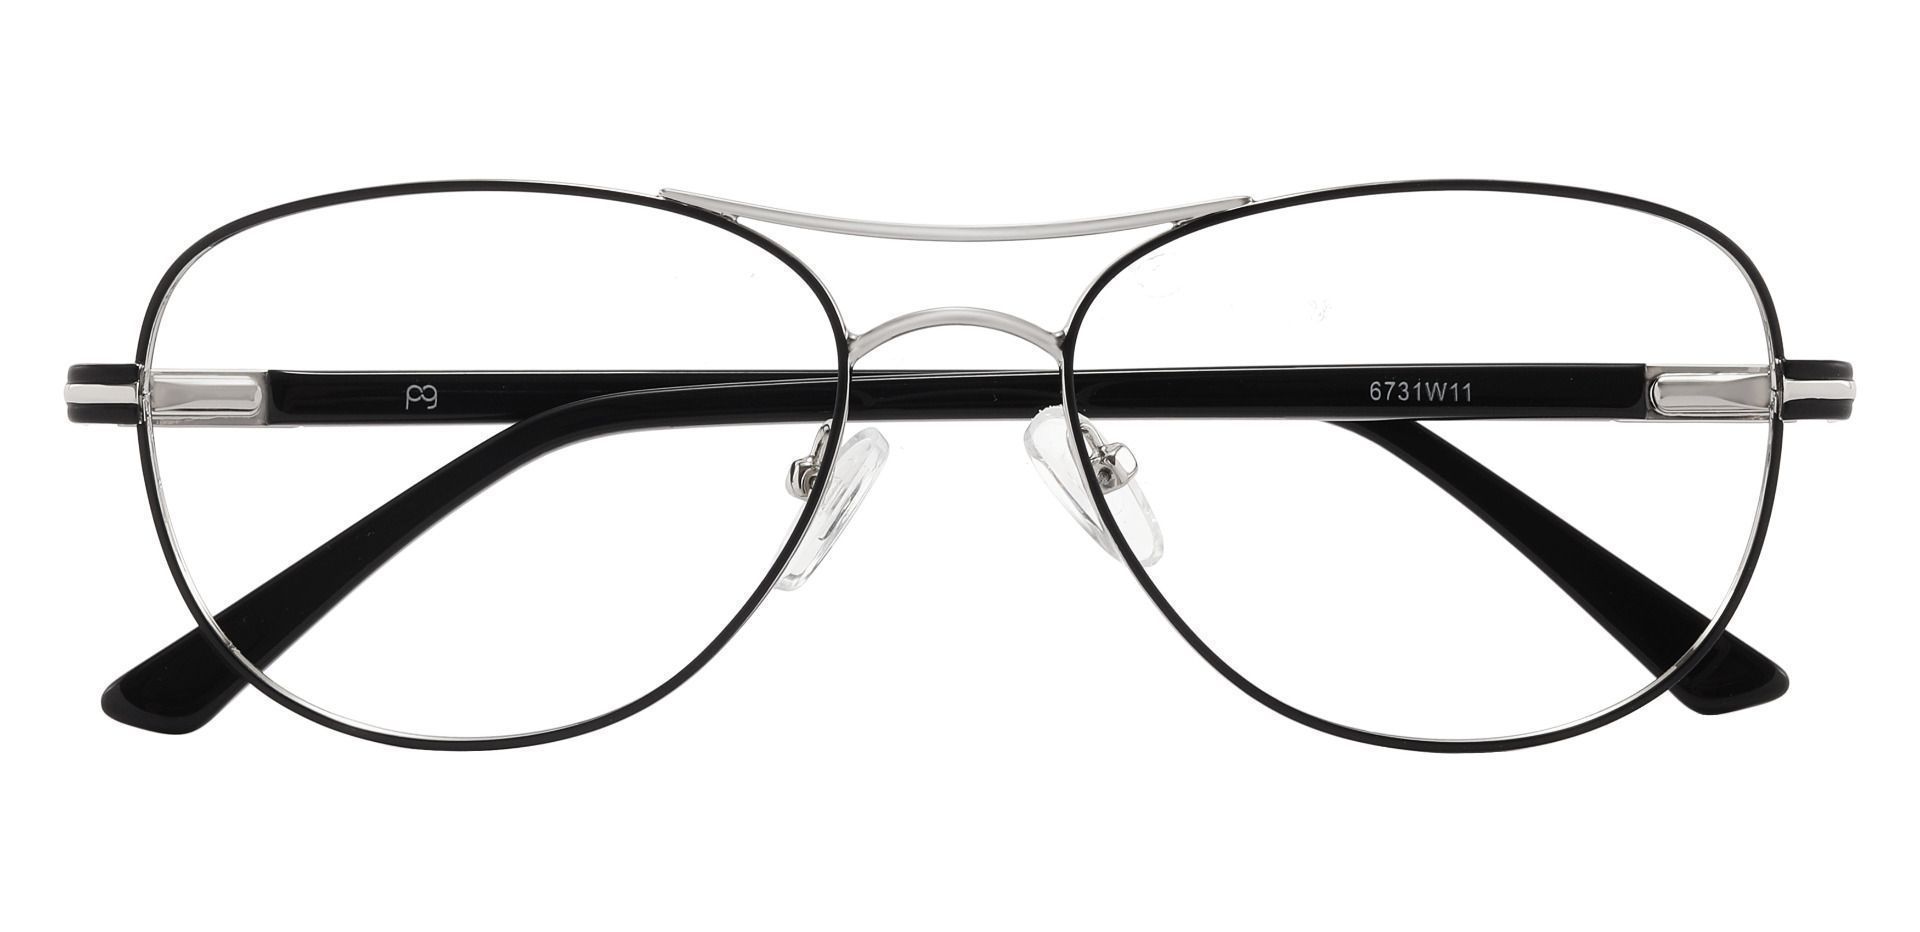 Reeves Aviator Eyeglasses Frame - Silver